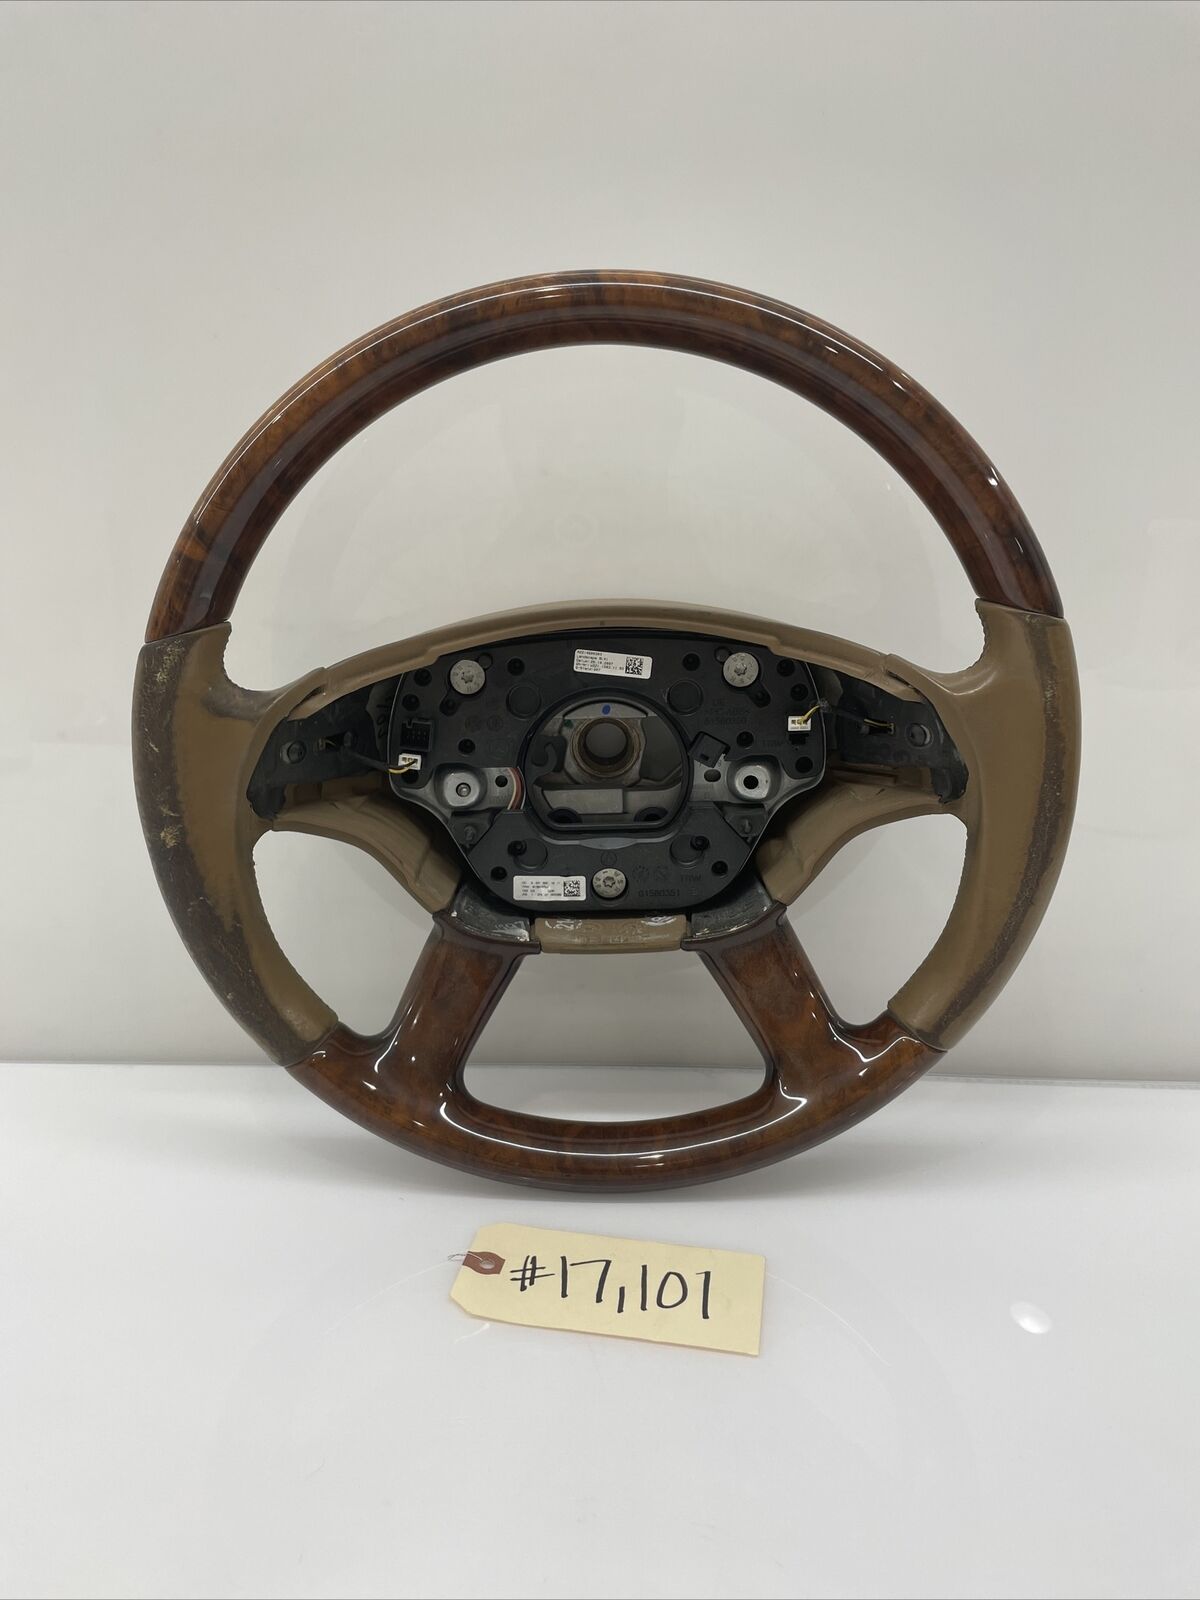 07-10 Mercedes W221 Driver Steering Wheel Leather Black Wood Grain 2214600303